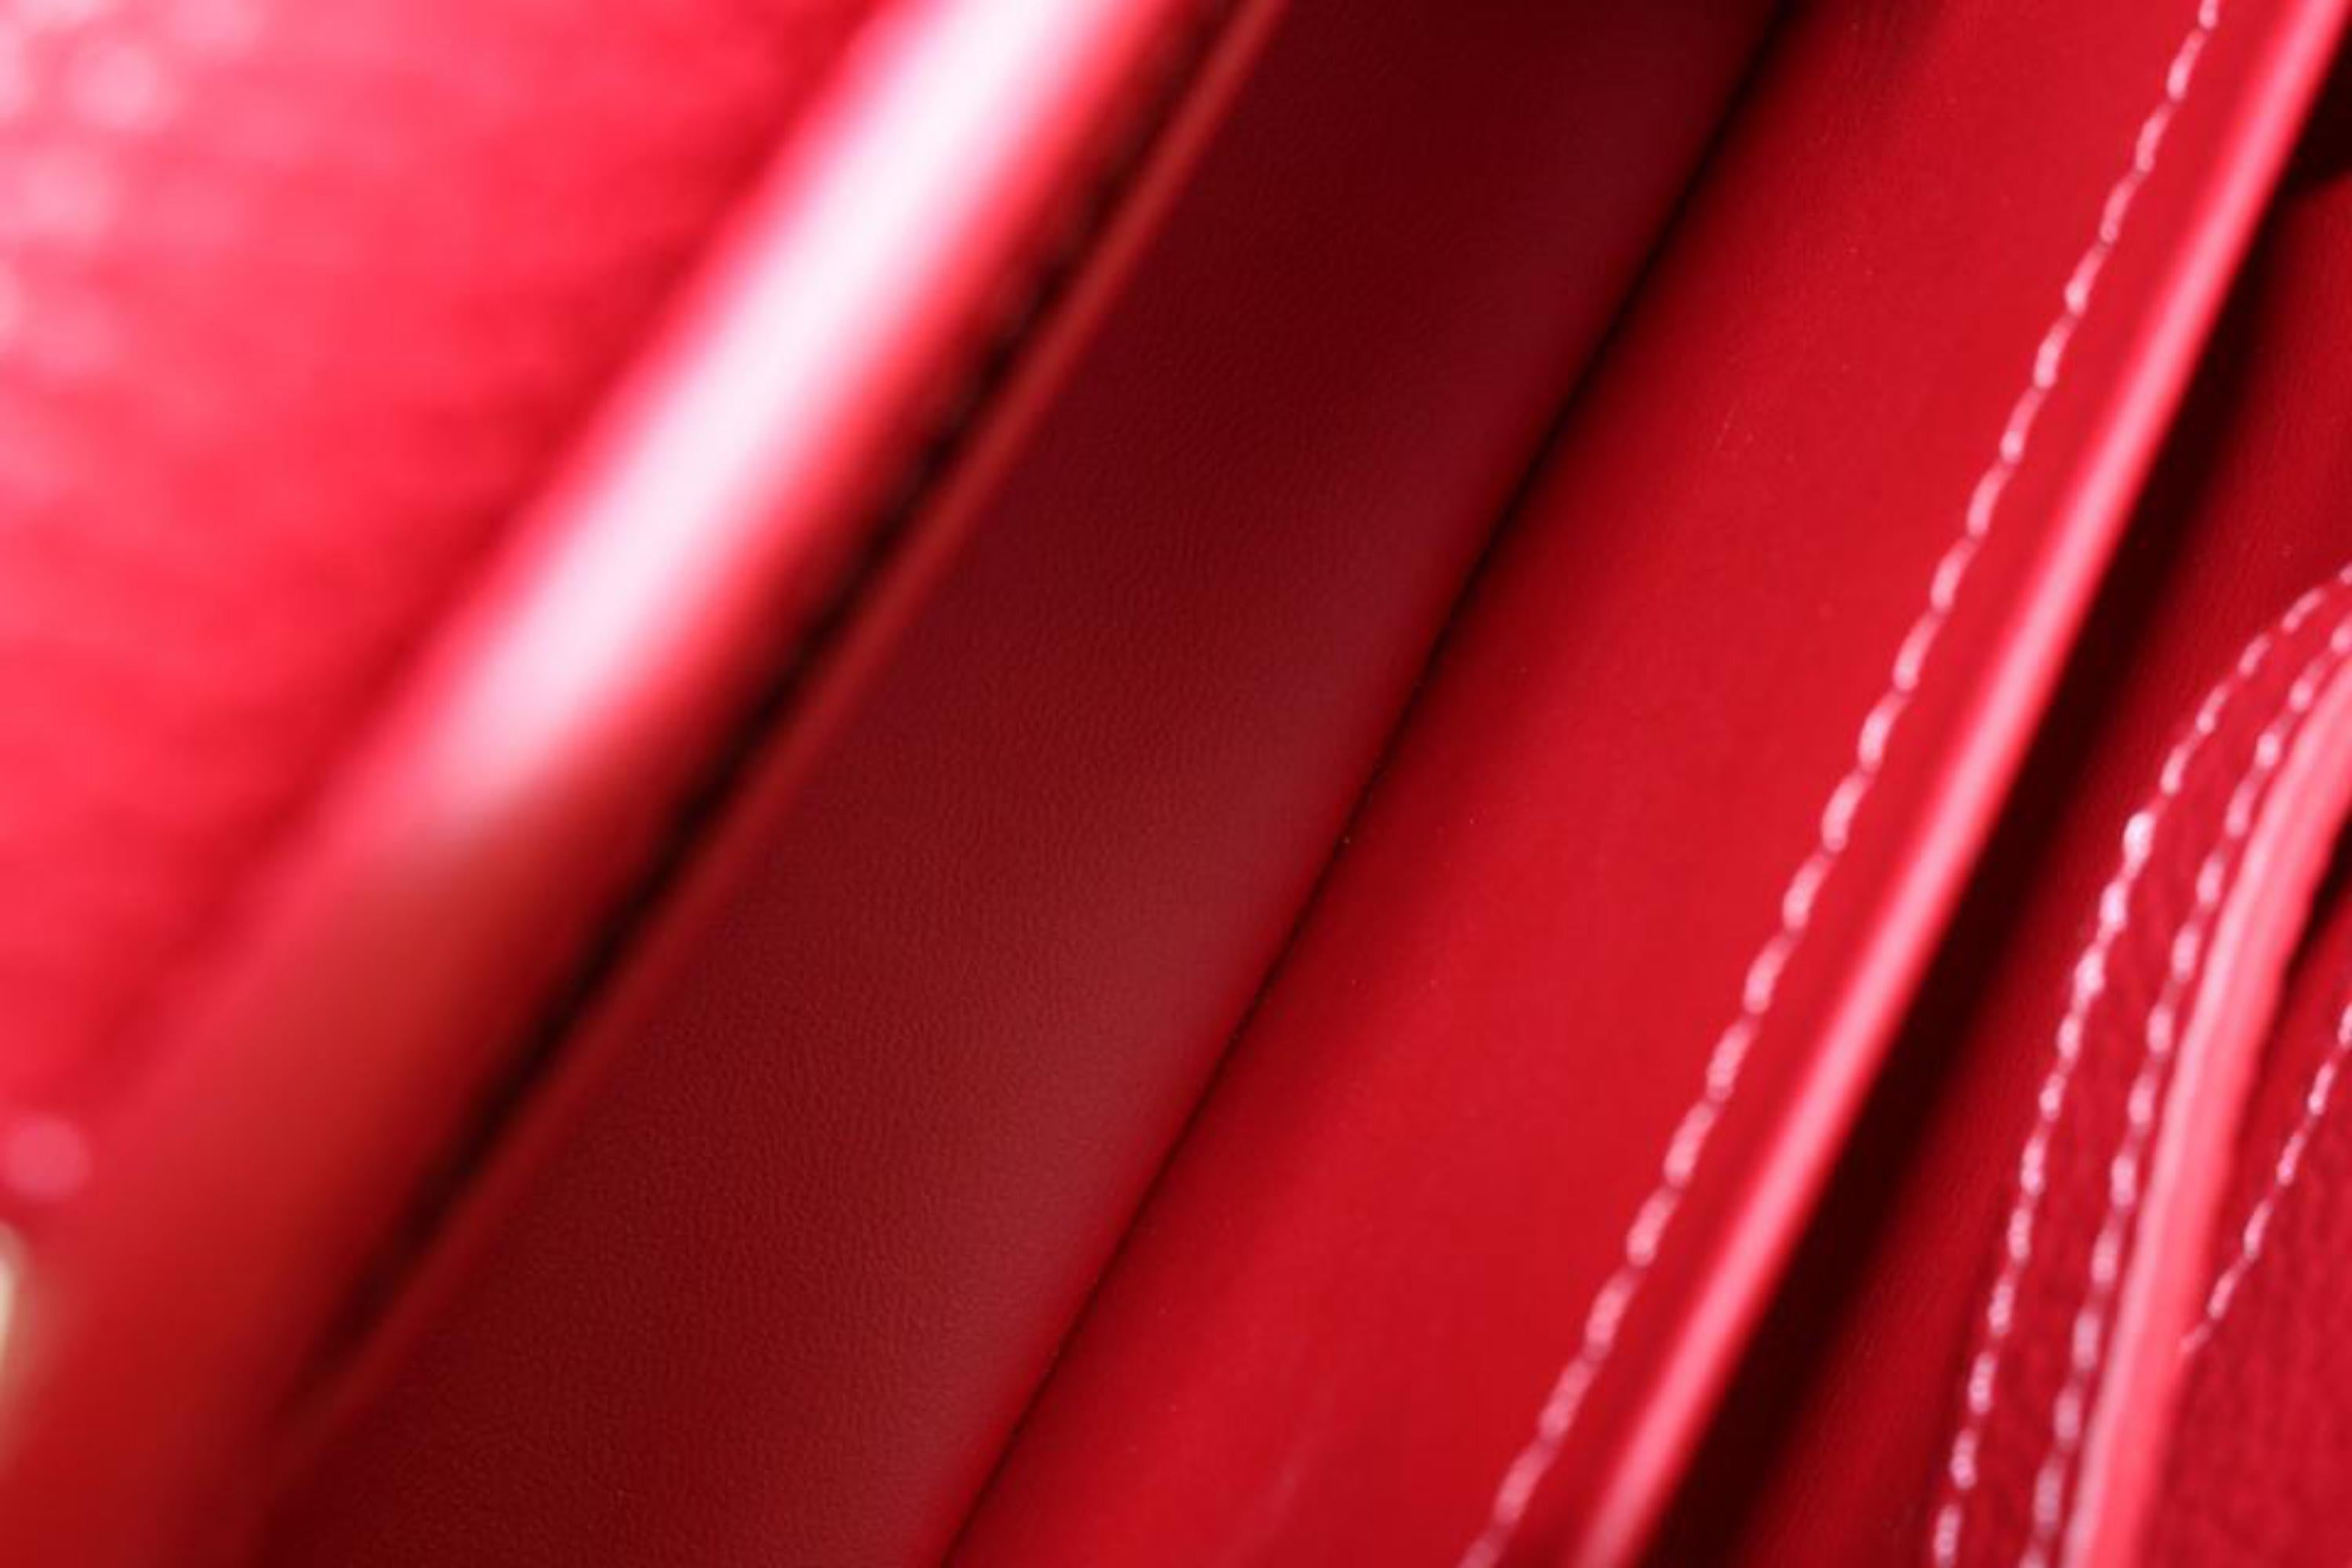 Louis Vuitton Capucines Taurillon Leather Pouch Scarlet